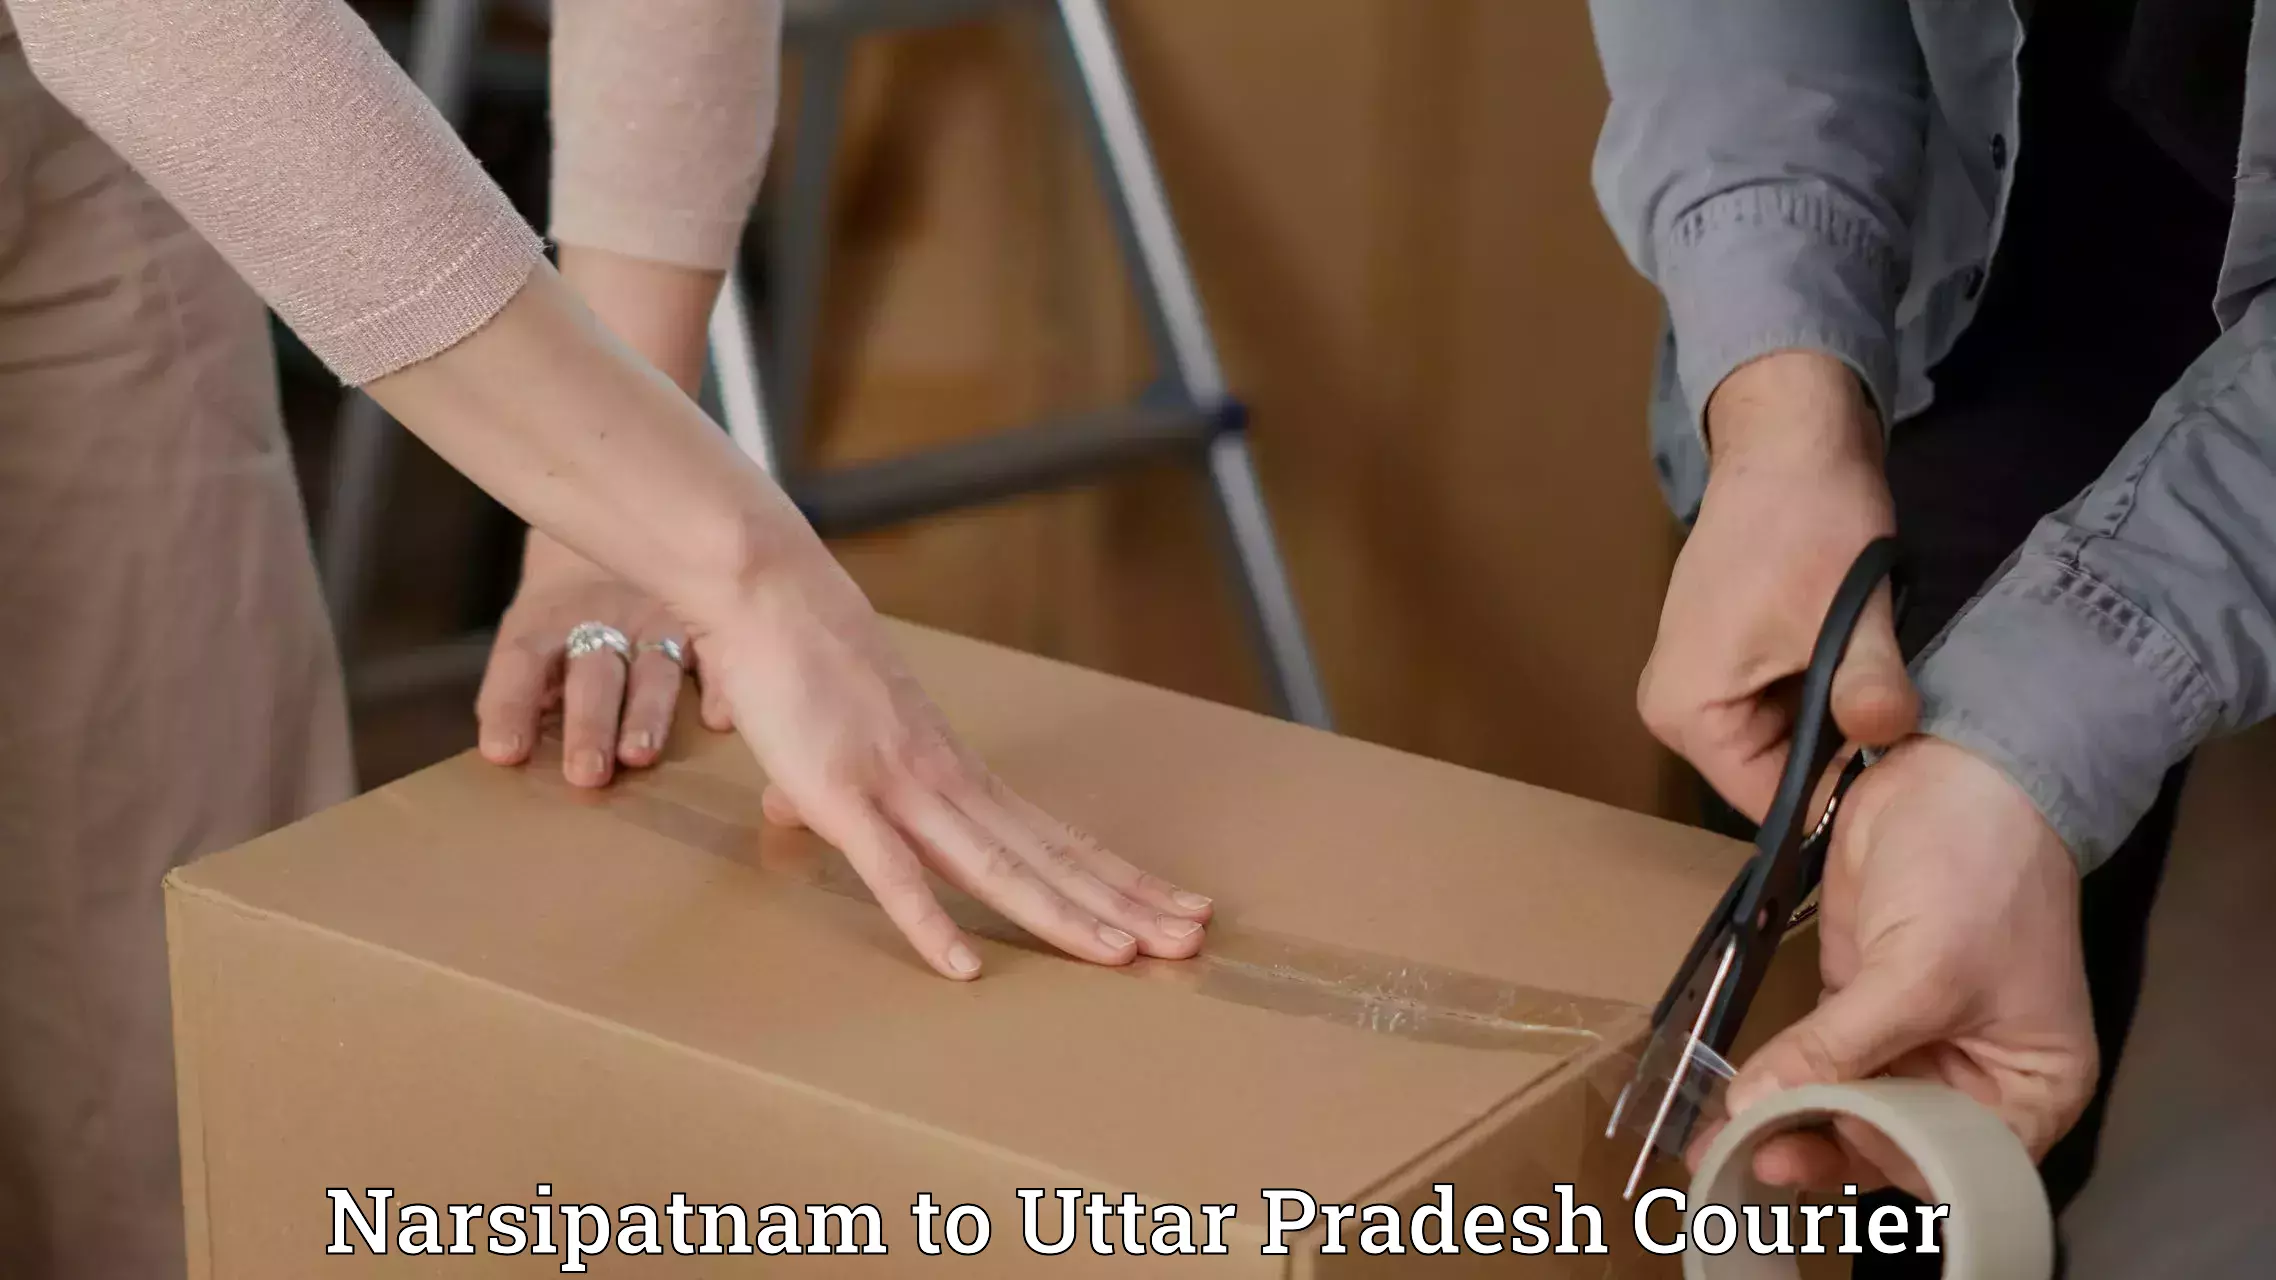 Professional courier handling Narsipatnam to Agra